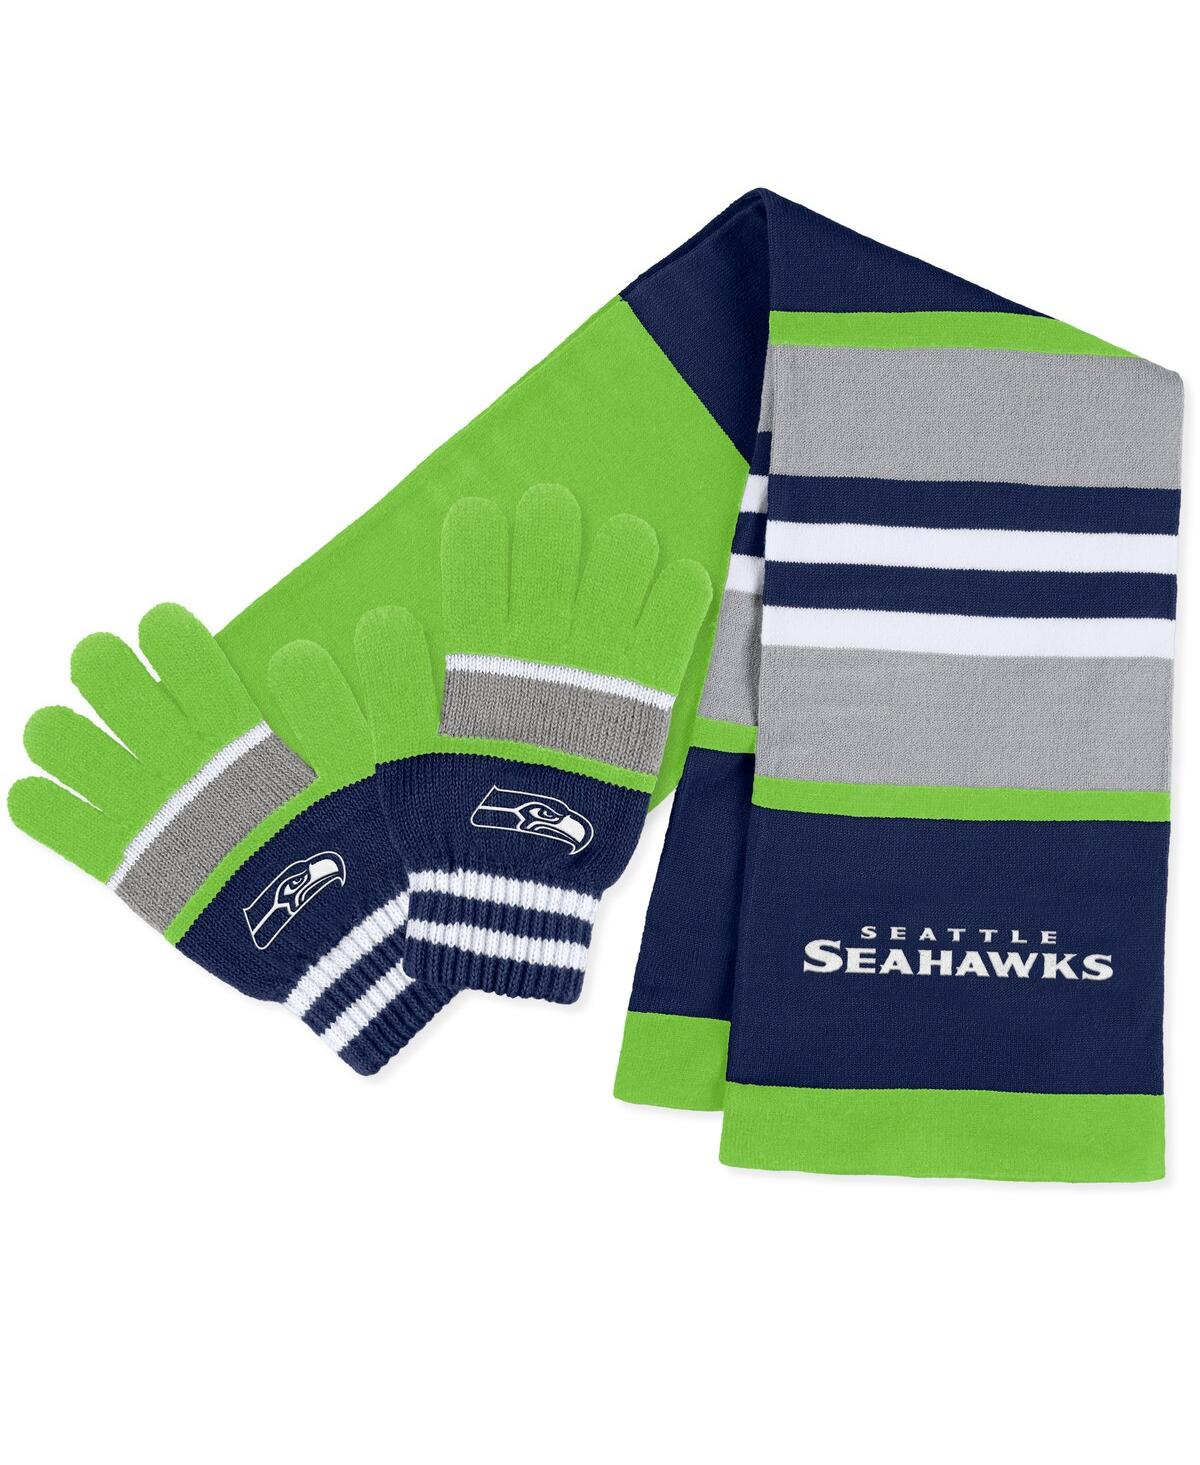 Women's Wear by Erin Andrews Seattle Seahawks Stripe Glove and Scarf Set - Green, Navy